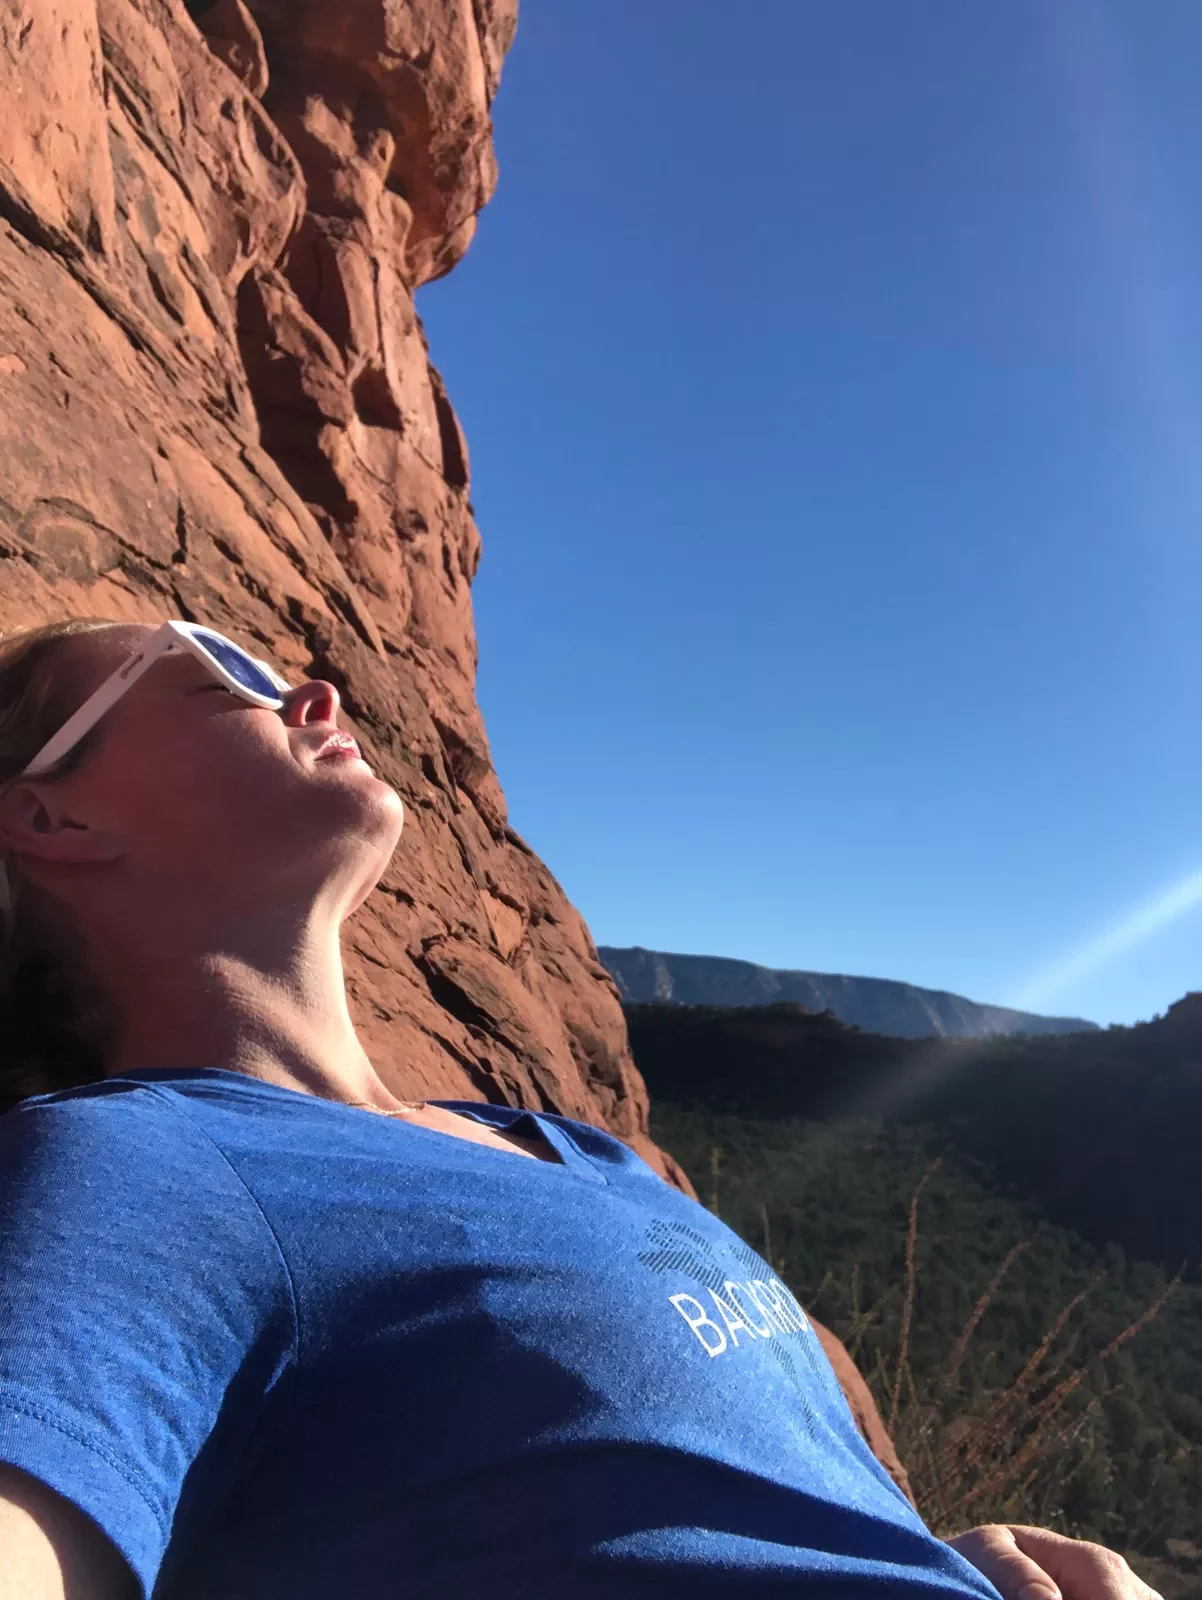 Woman resting on a hike, sunbathing.